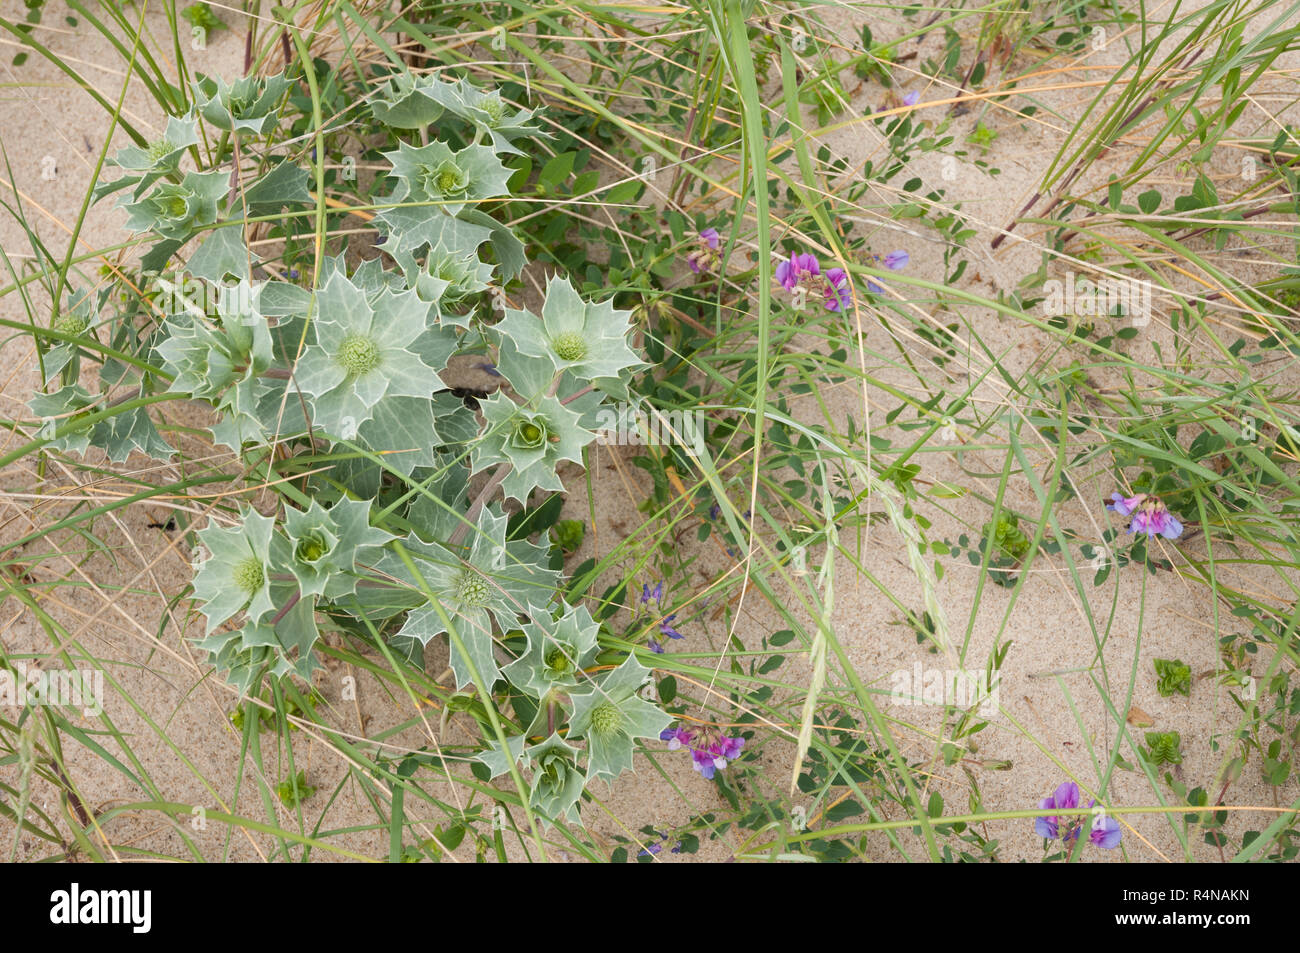 Sand-dune community with Sea Holly (Eryngium maritimum), Sea Pea (Lathyrus japonicus) and Sea Sandwort (Honckenya peploides) on the danish west coast Stock Photo